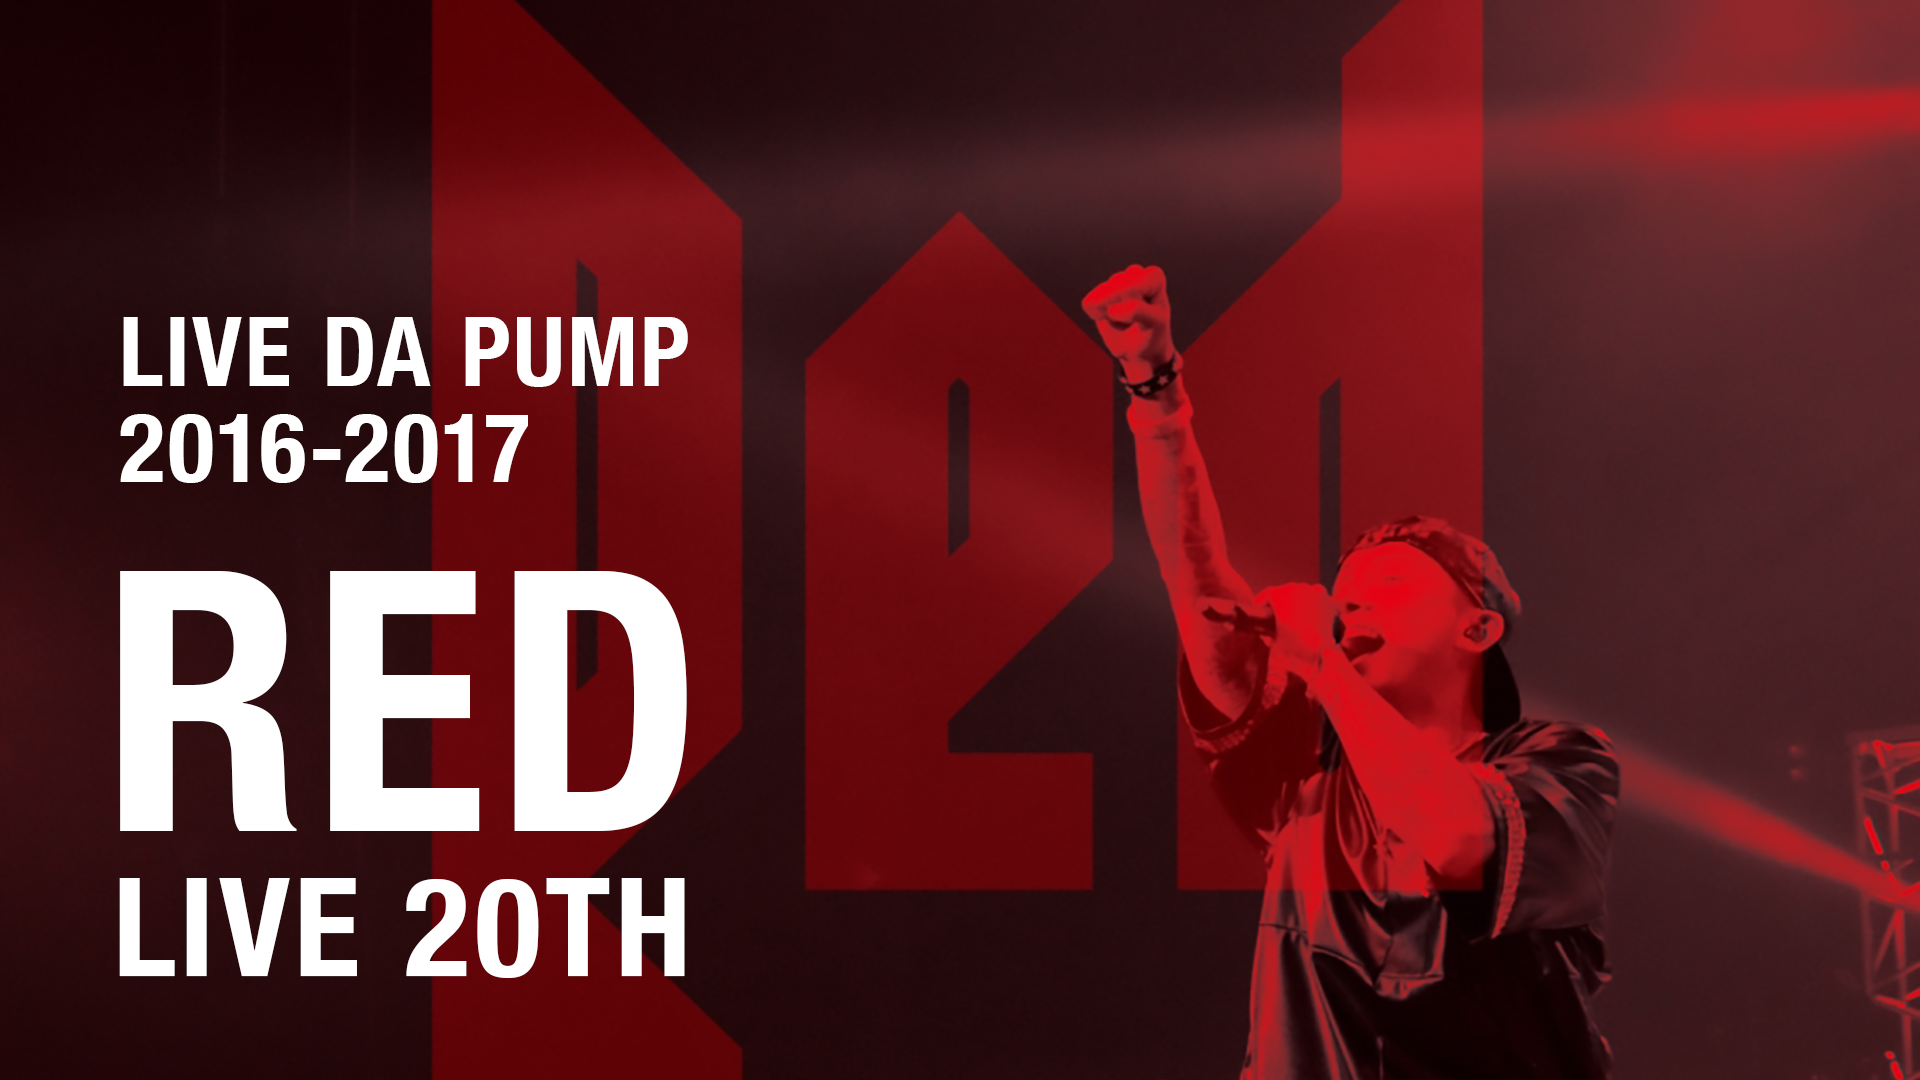 LIVE DA PUMP 2016-2017 RED〜live 20th〜初回盤